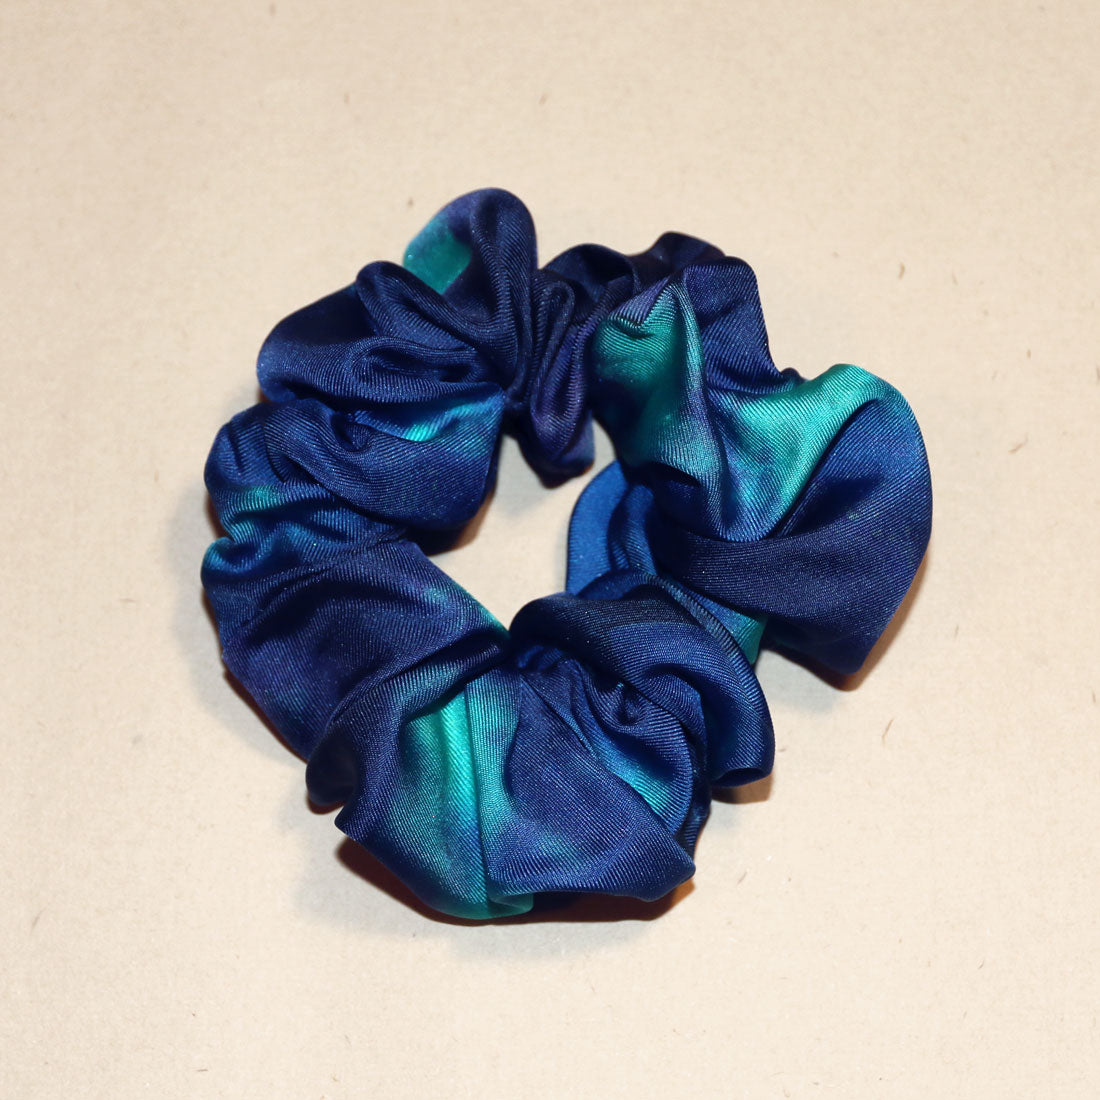 buy blue fashion silk scrunchies online paris taipei tokyo harvey nichols isetan selfridges barneys new york 